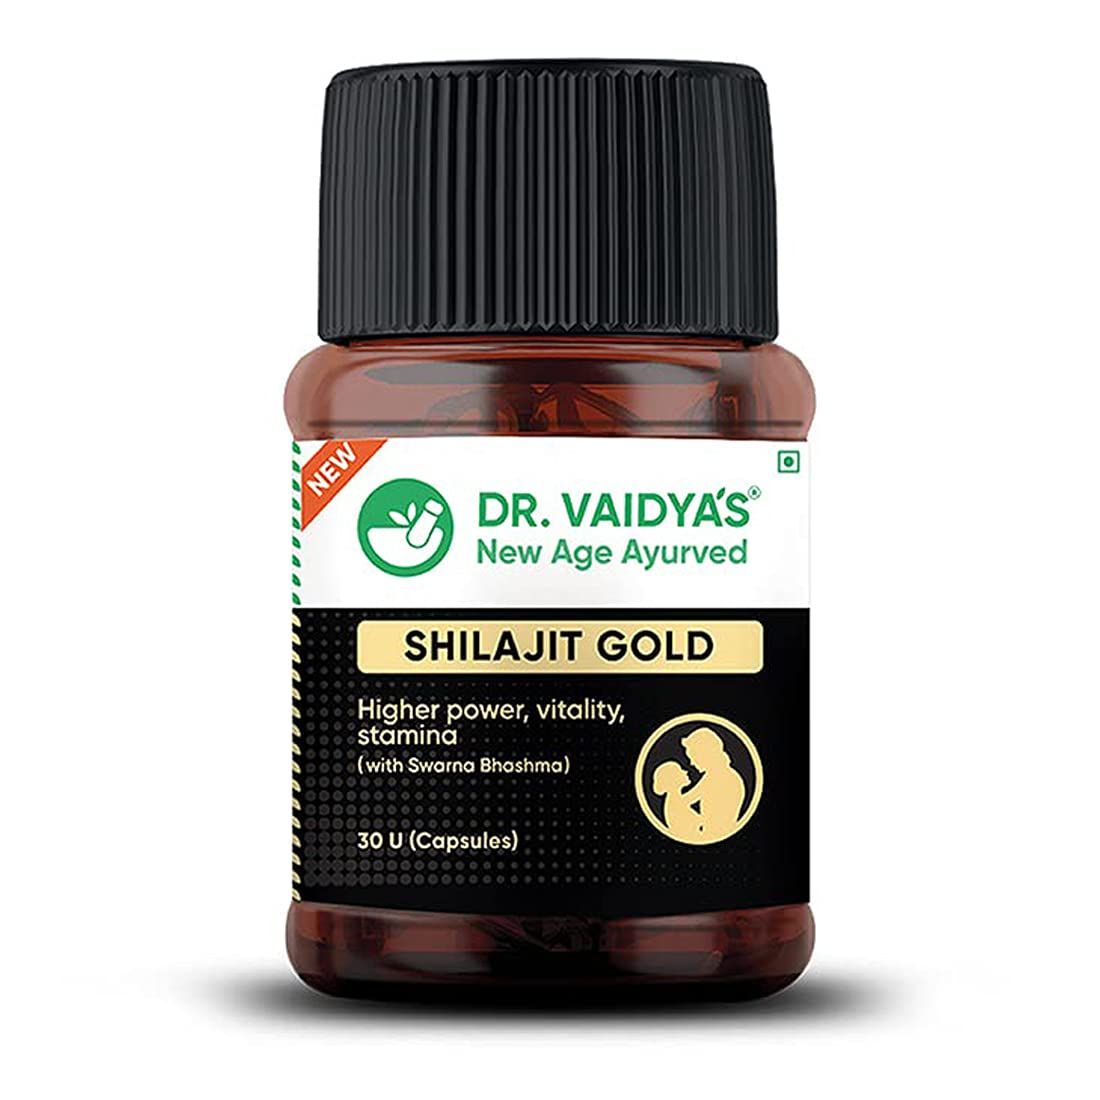 DR. VAIDYA'S New Age Ayurveda Shilajit Gold Image